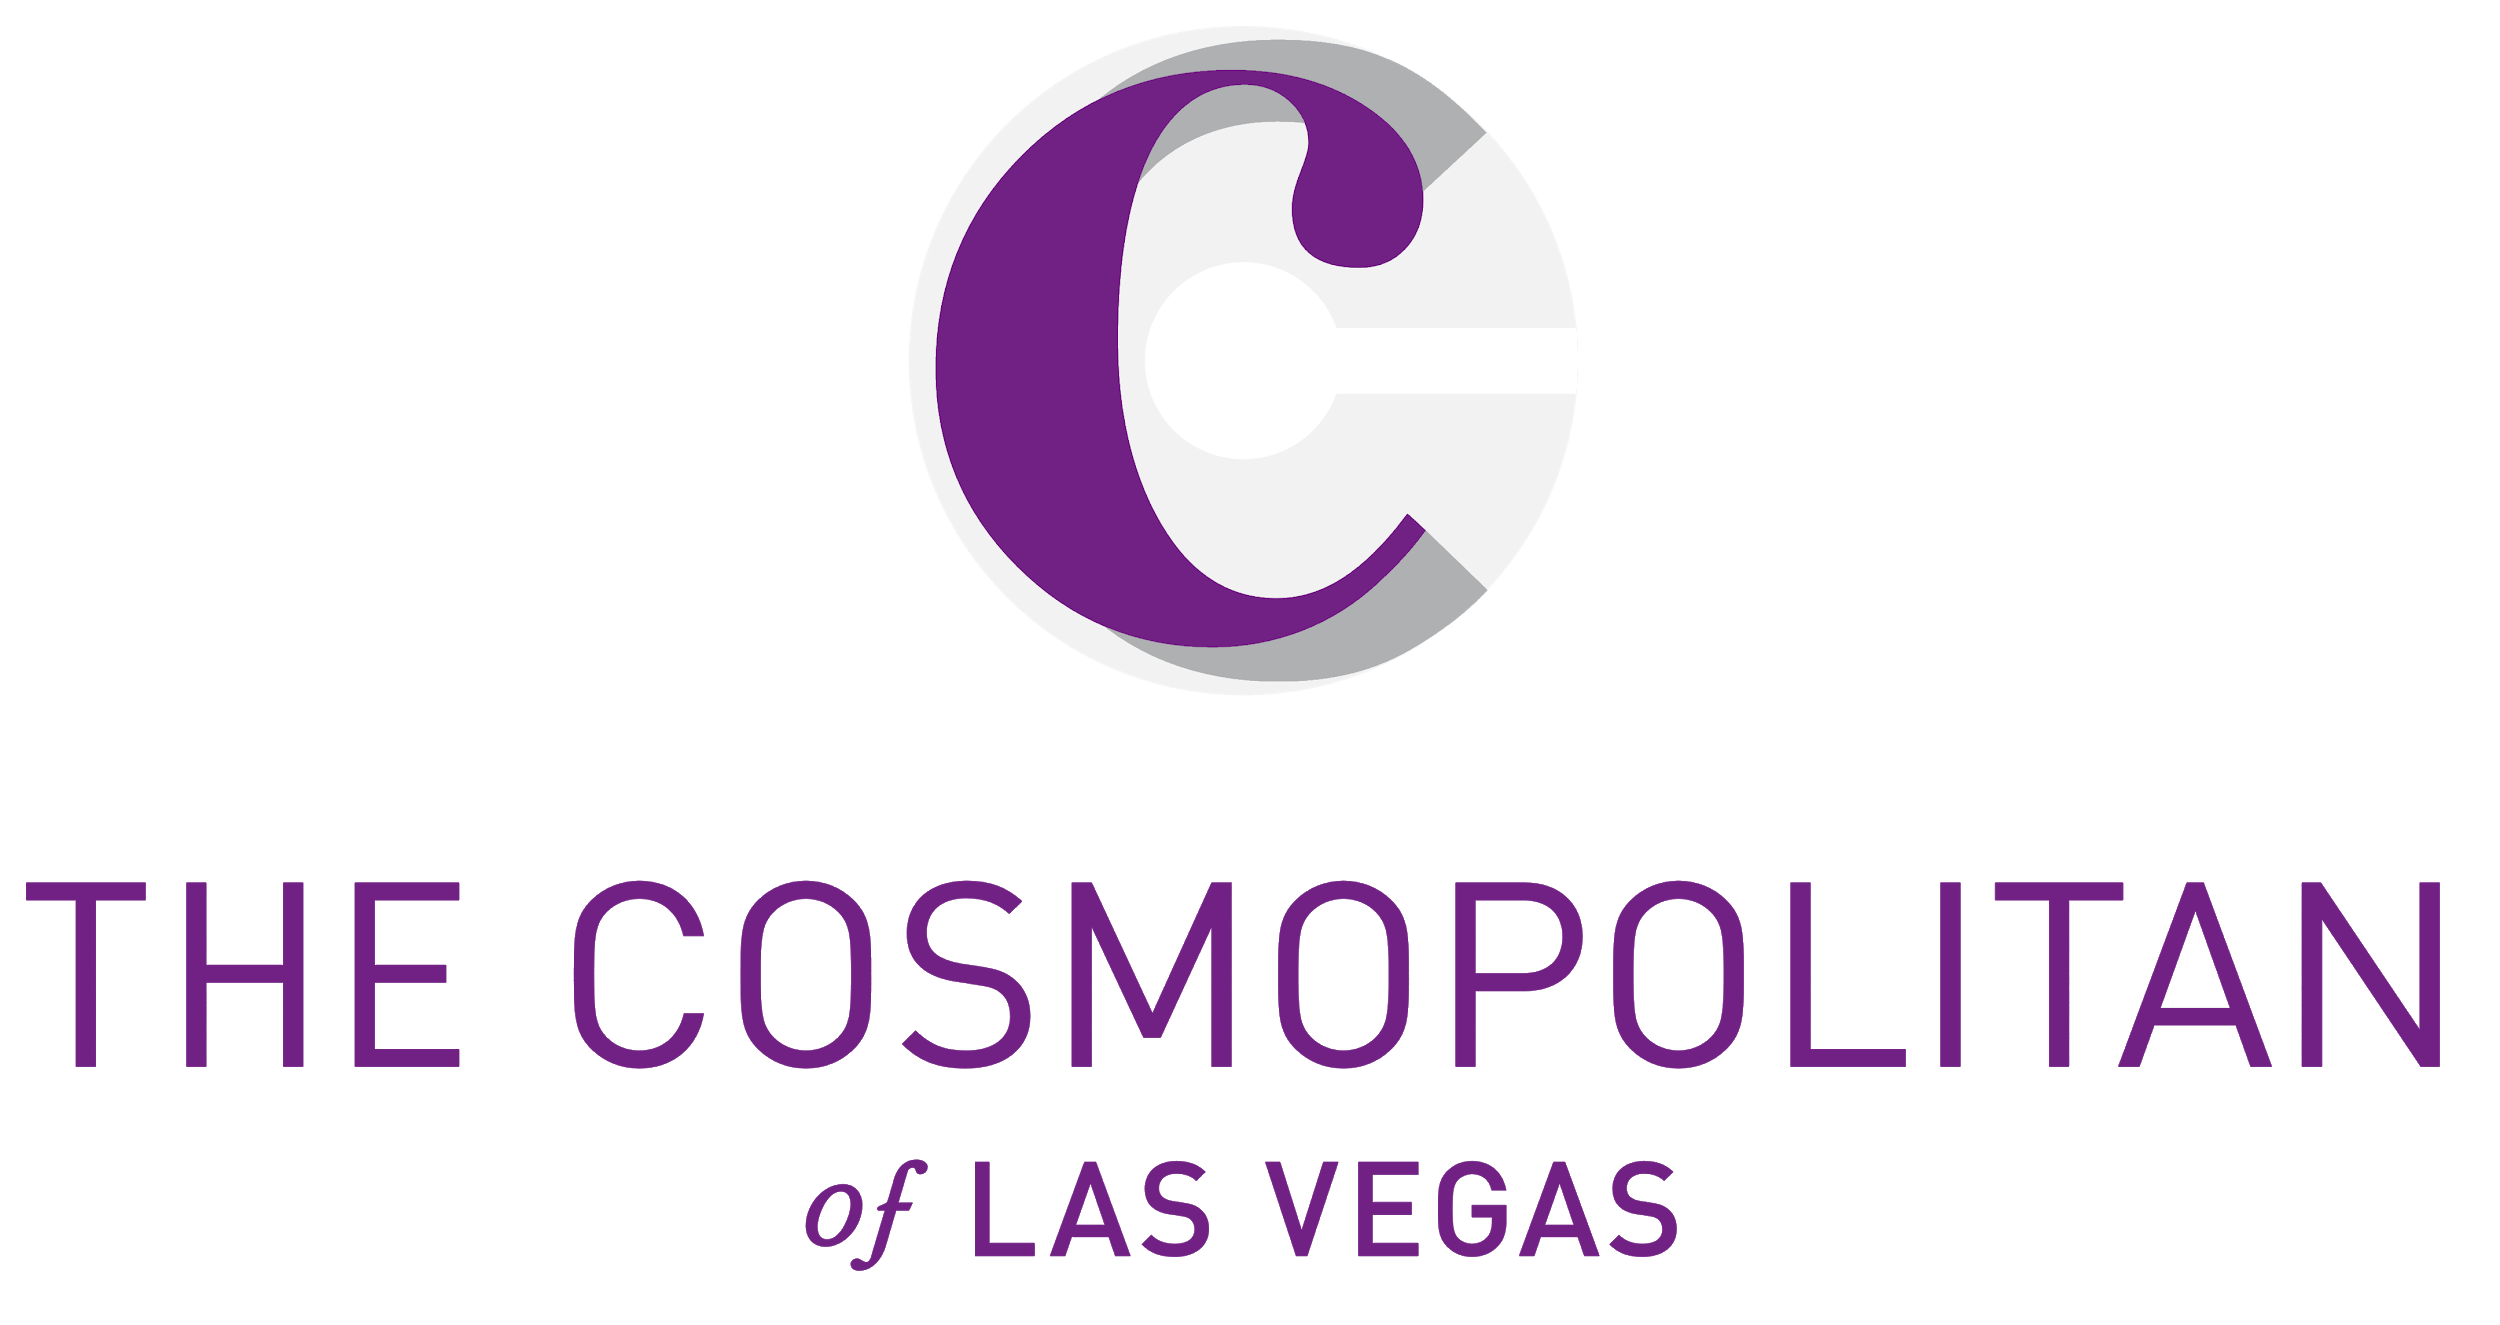 The Cosmopolitan Las Vegas logo